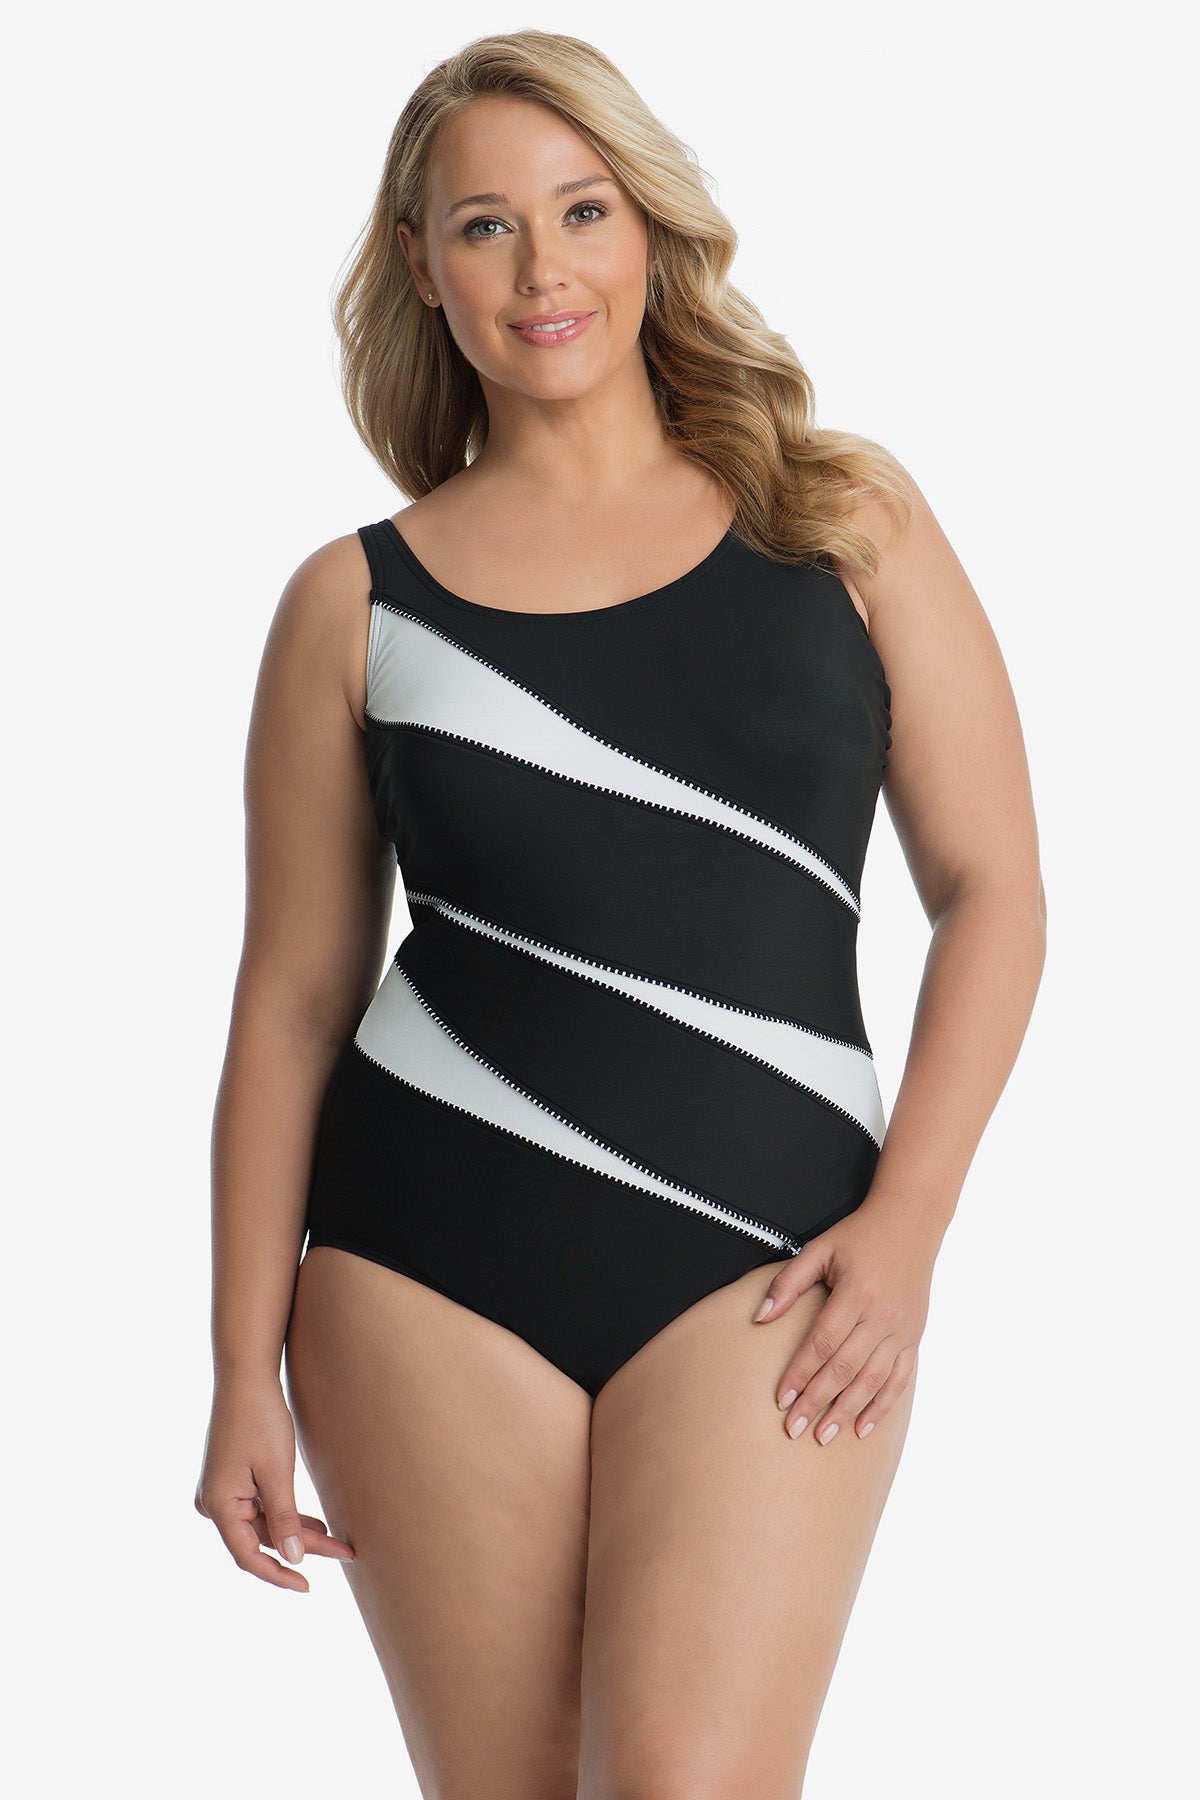 Women's Two Piece Plus Size Swimsuits Tummy Control Swimwear Bathing Suits  - Black 